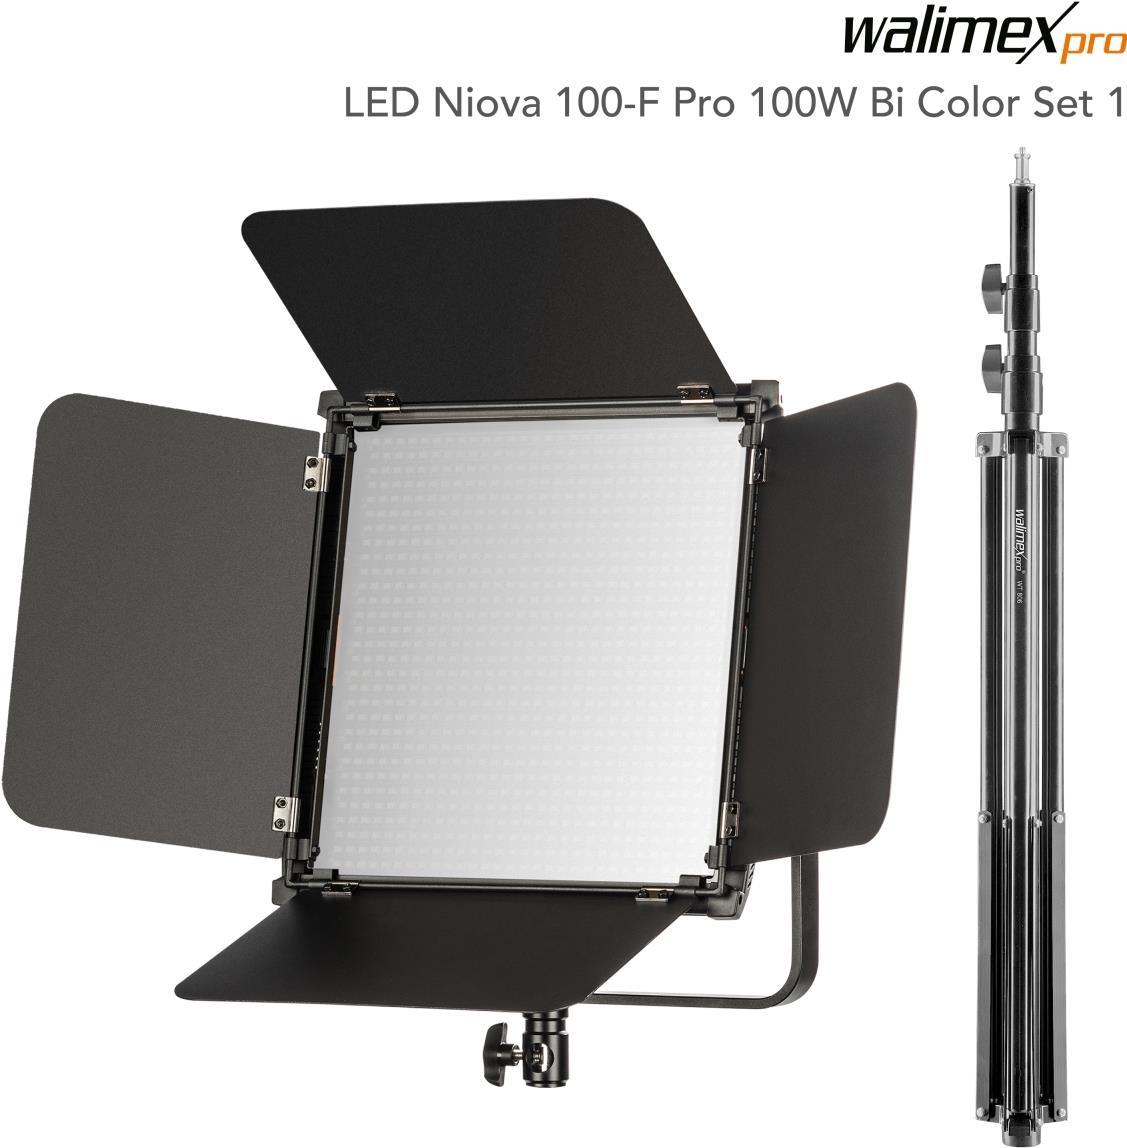 WALSER Walimex pro LED Niova 100-F Pro 100W Bi Color Set1 (23216)